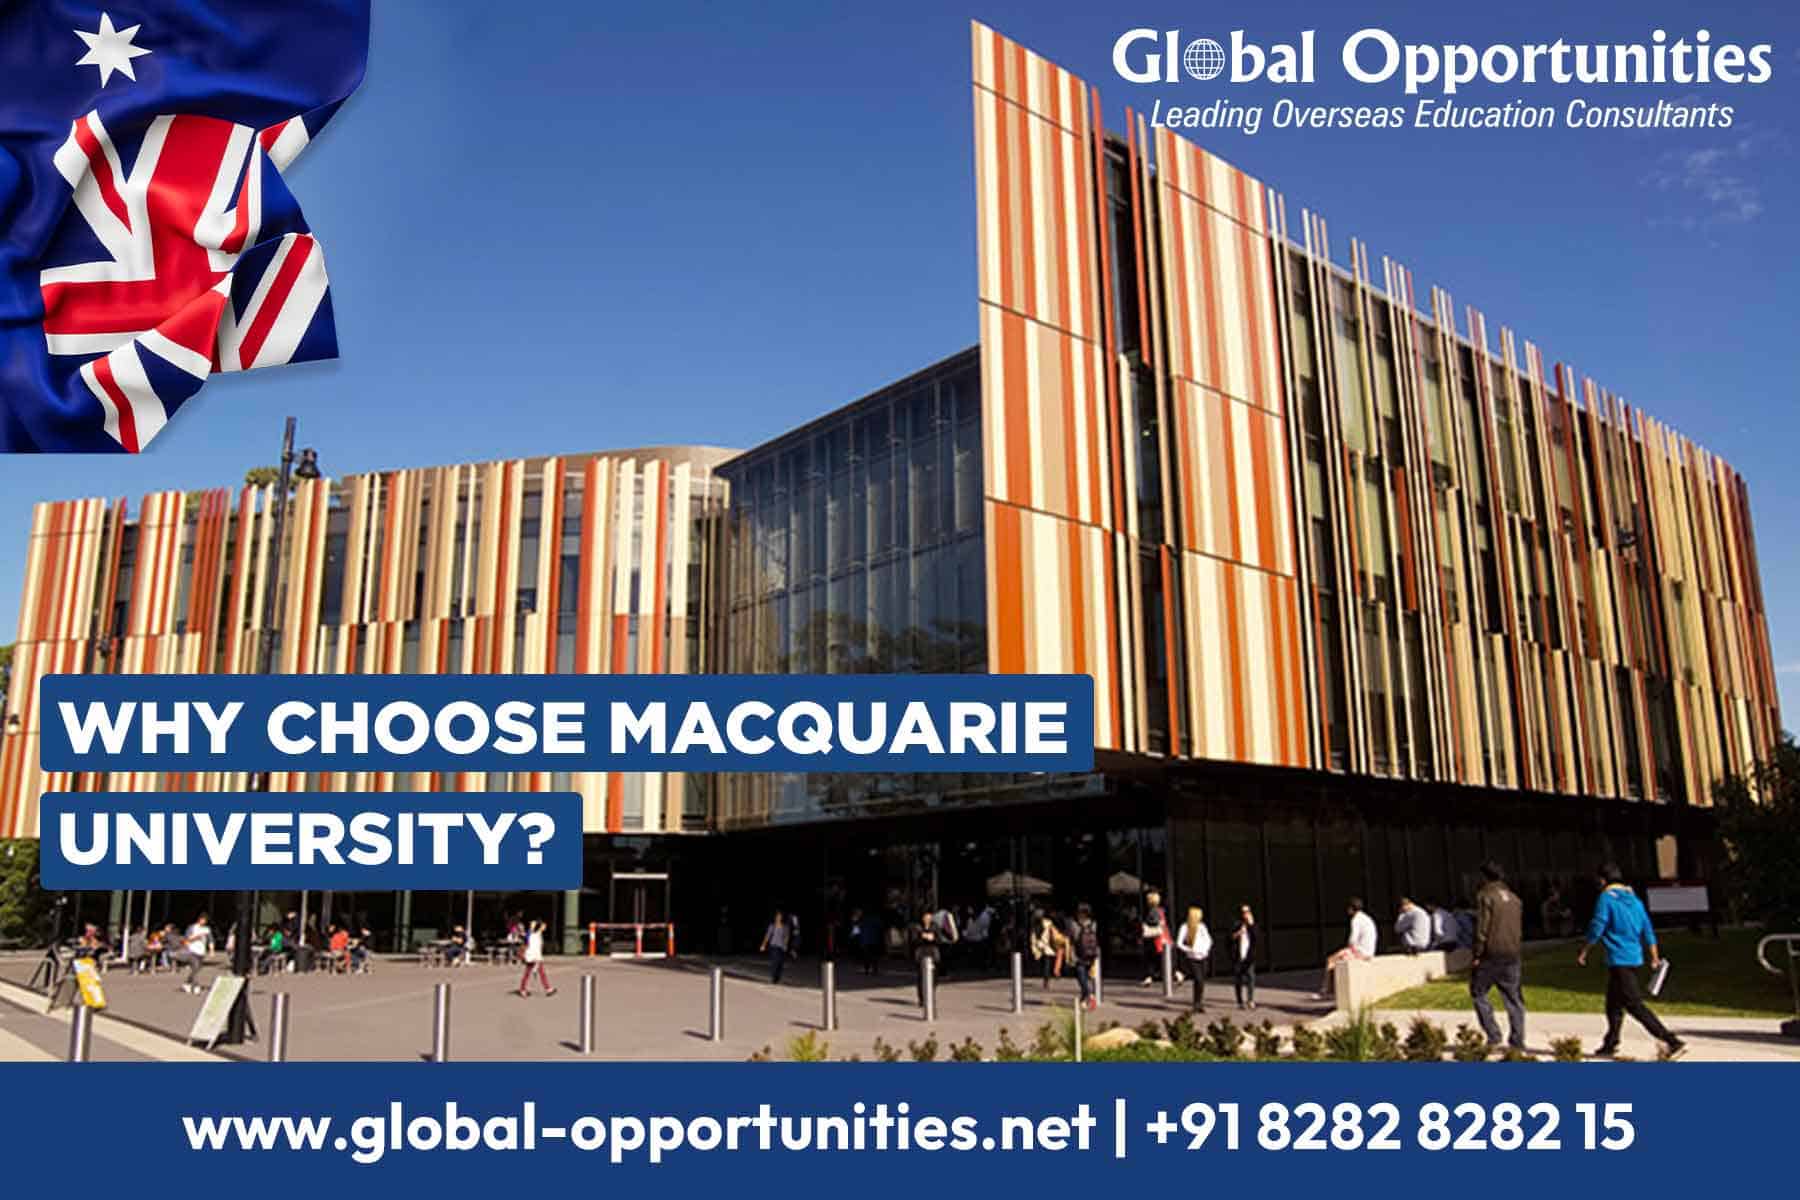 Why choose Macquarie University?